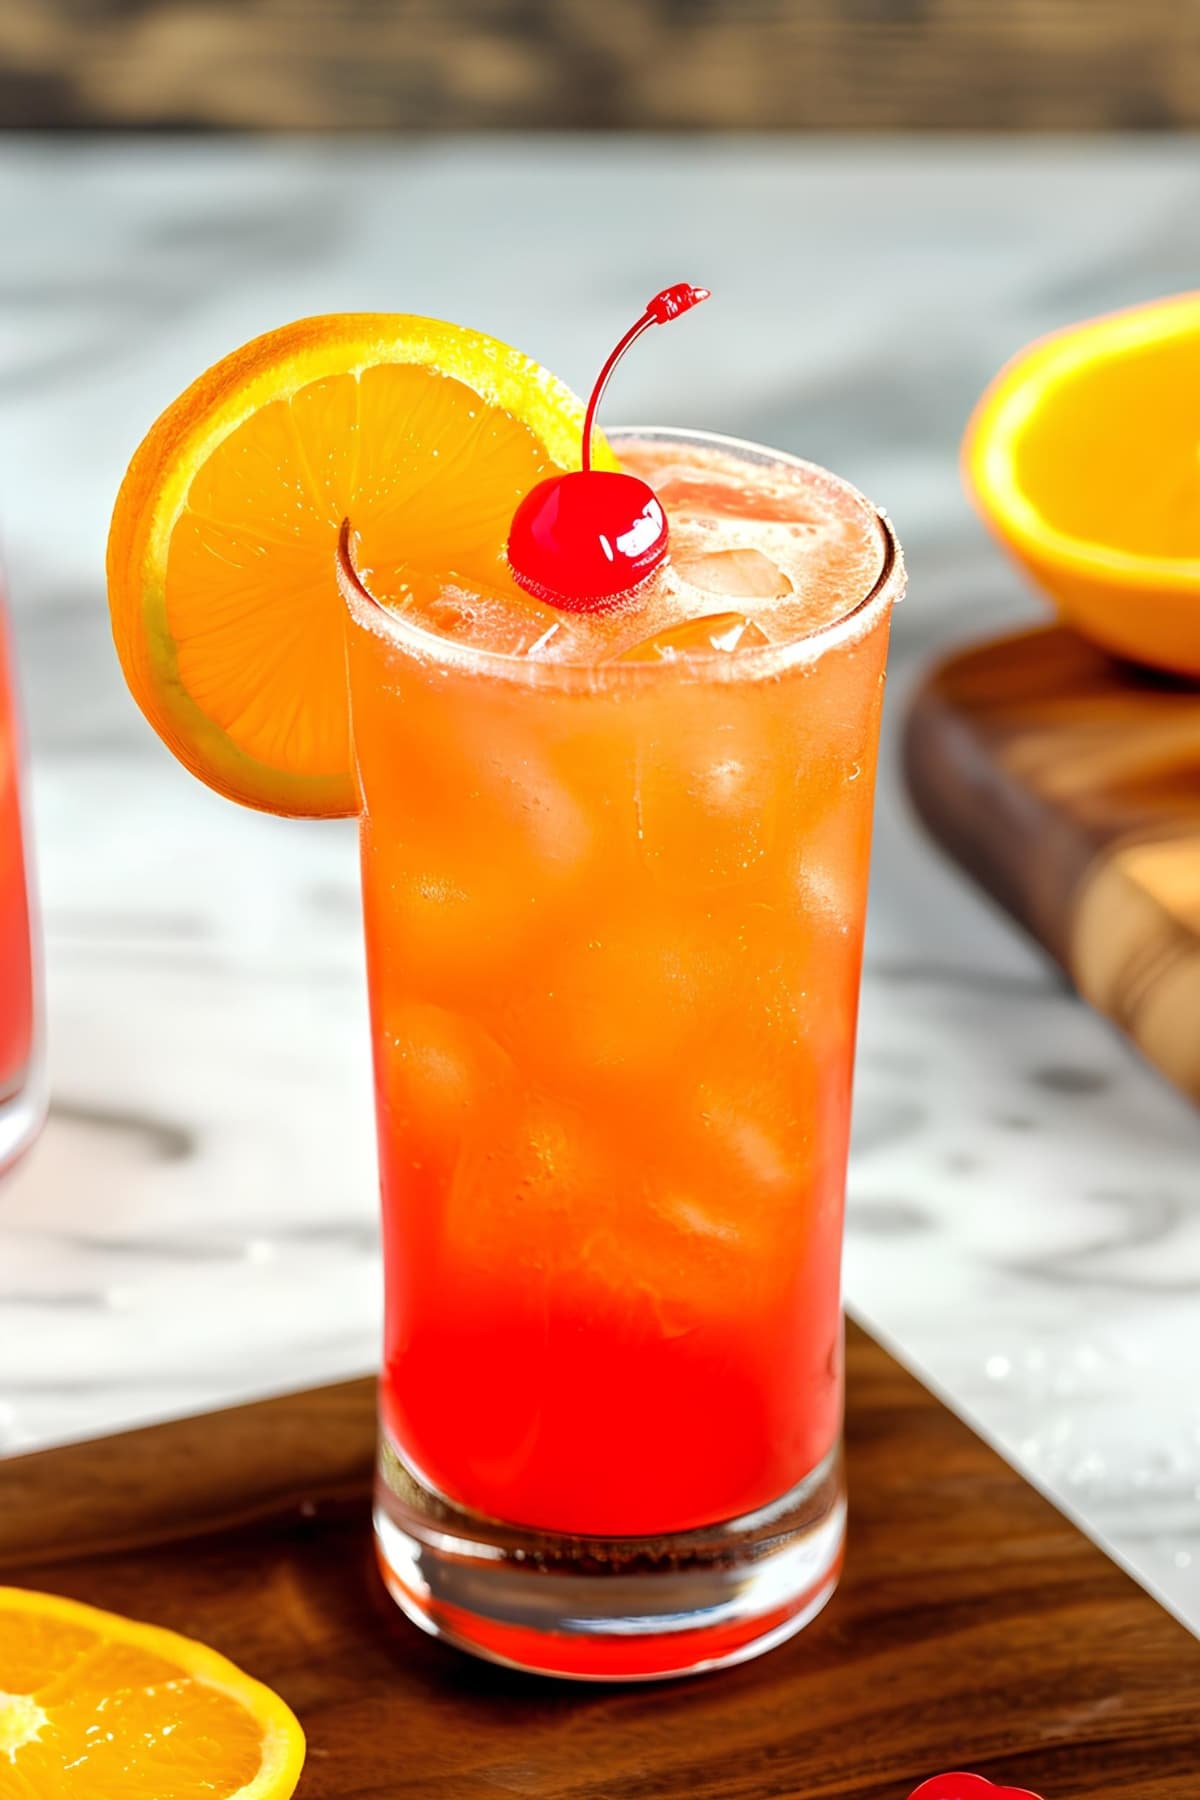 Sweet and fruity alabama slammer cocktail with maraschino cherry and orange wheel